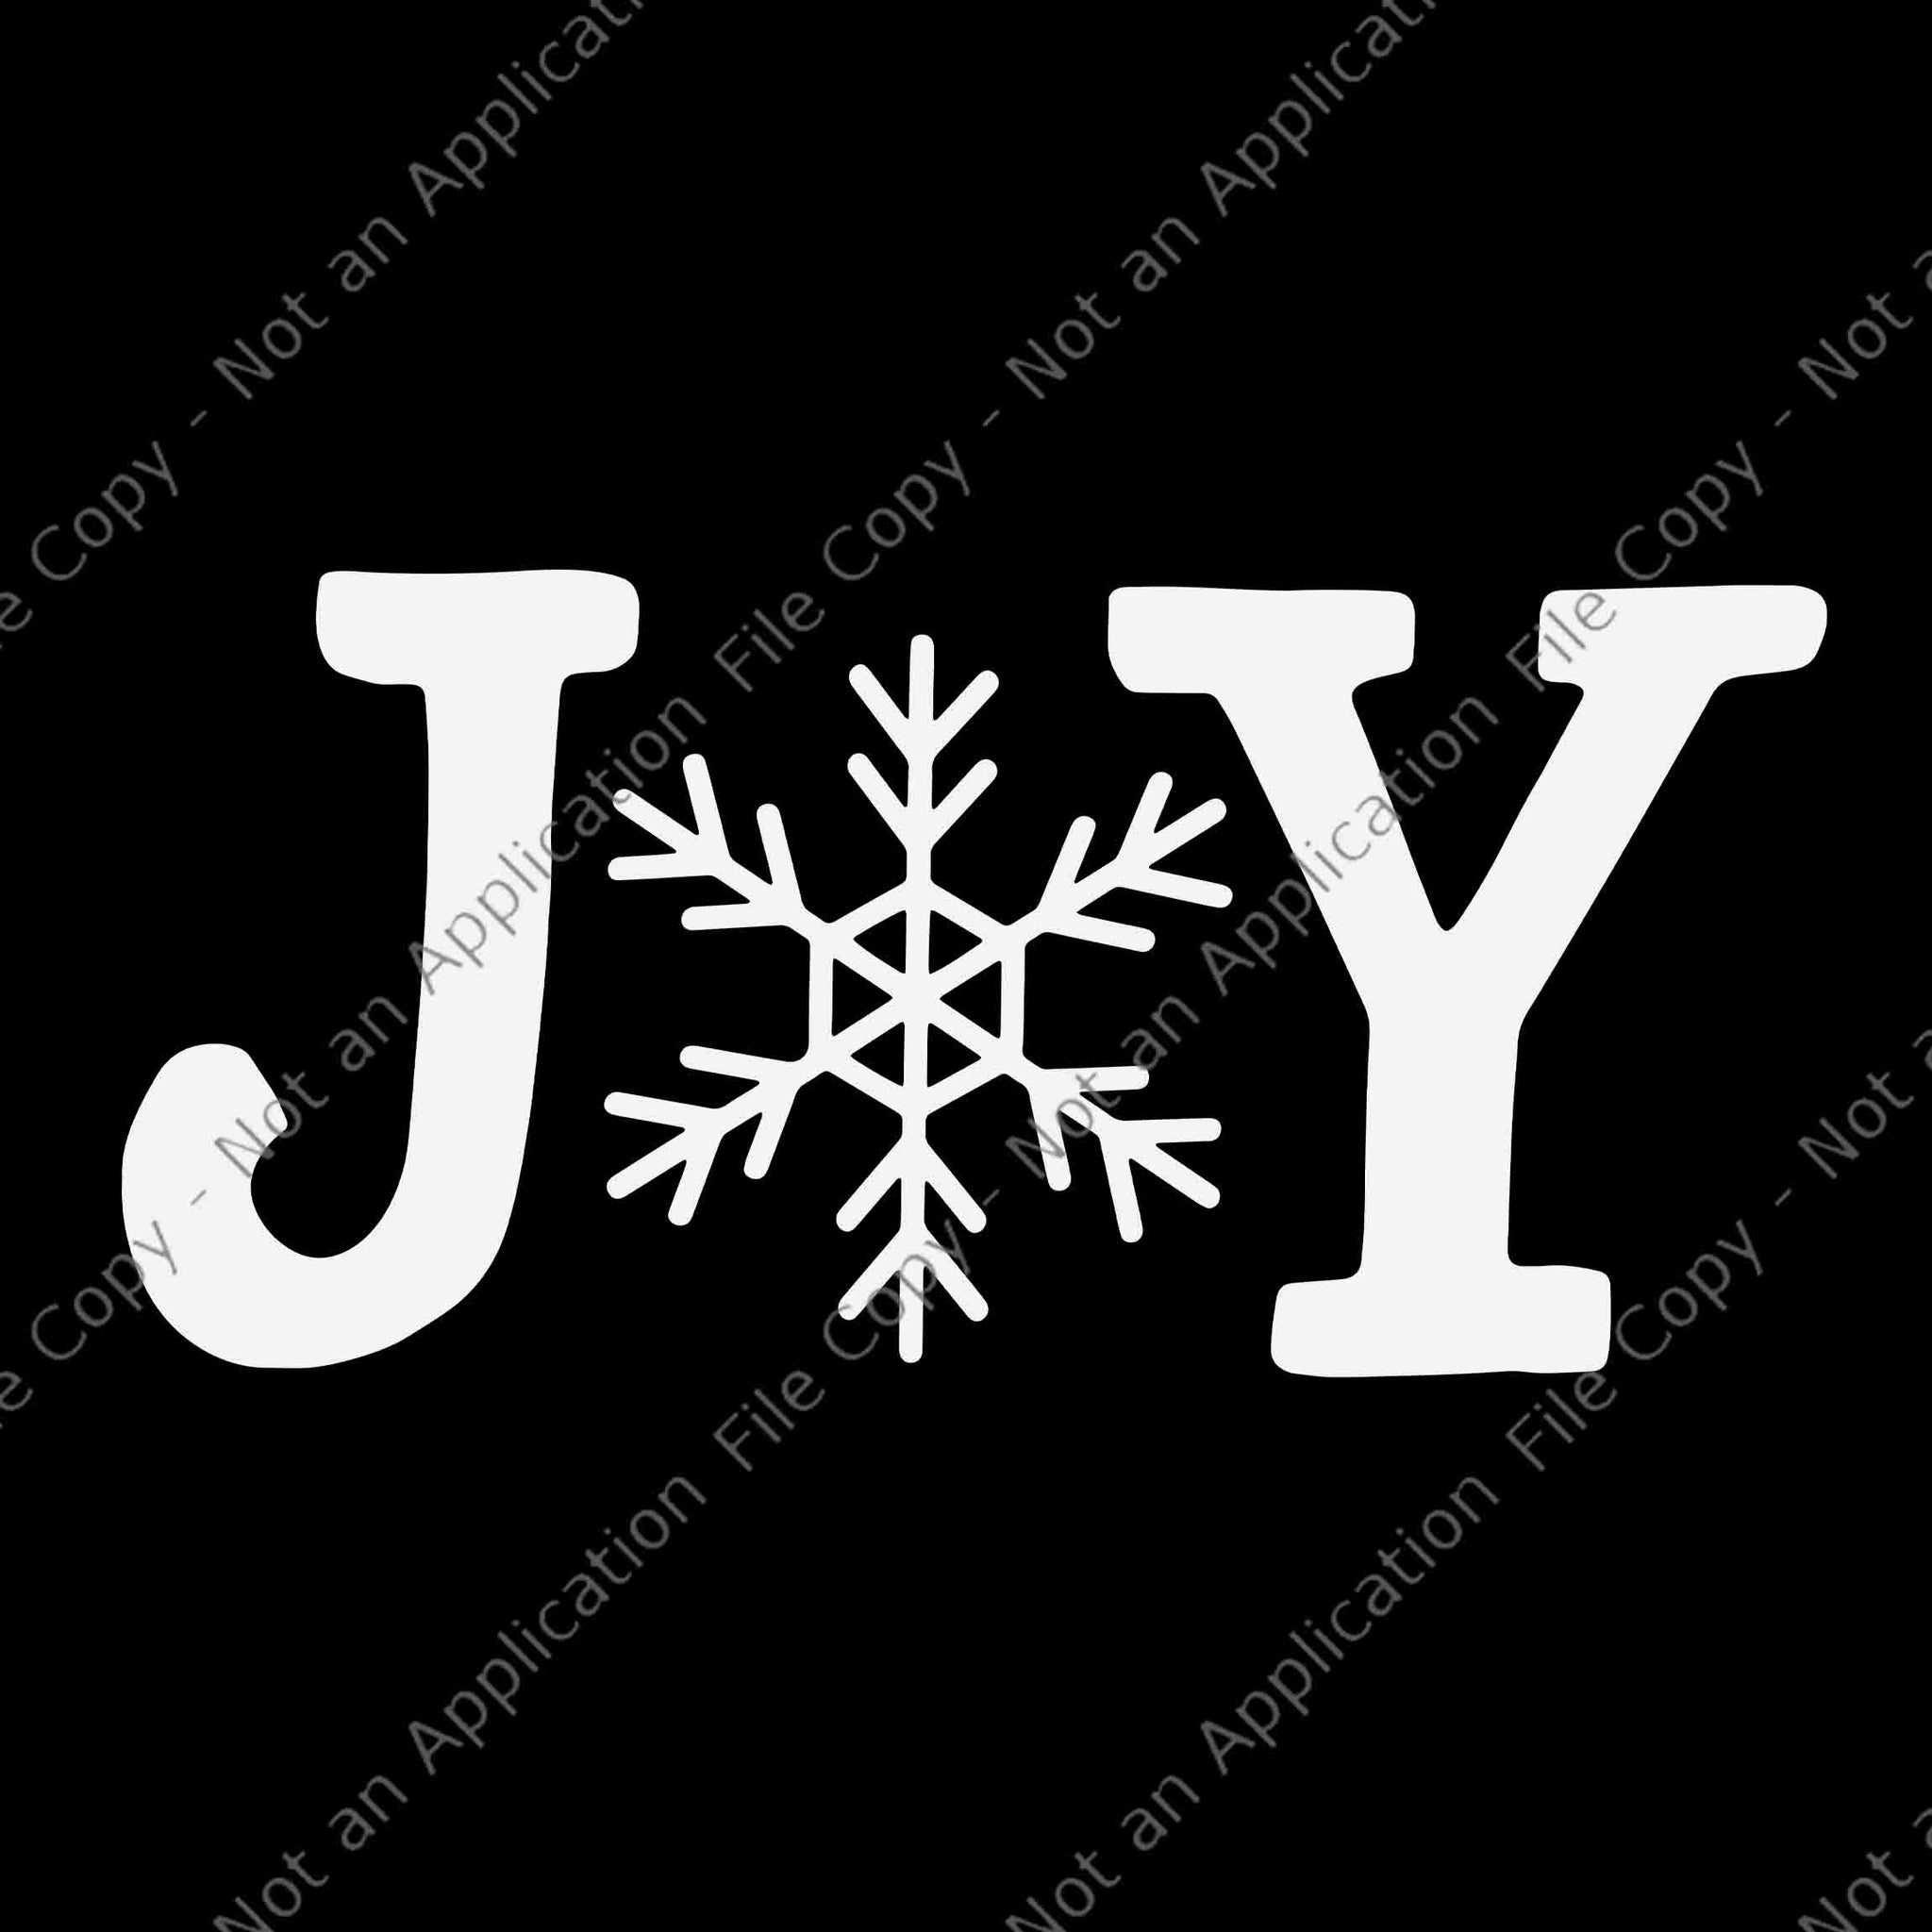 Joy Christmas Svg, Joy Snow Svg, Joy Xmas Svg, Snow Xmas Svg, Snow Christmas Svg